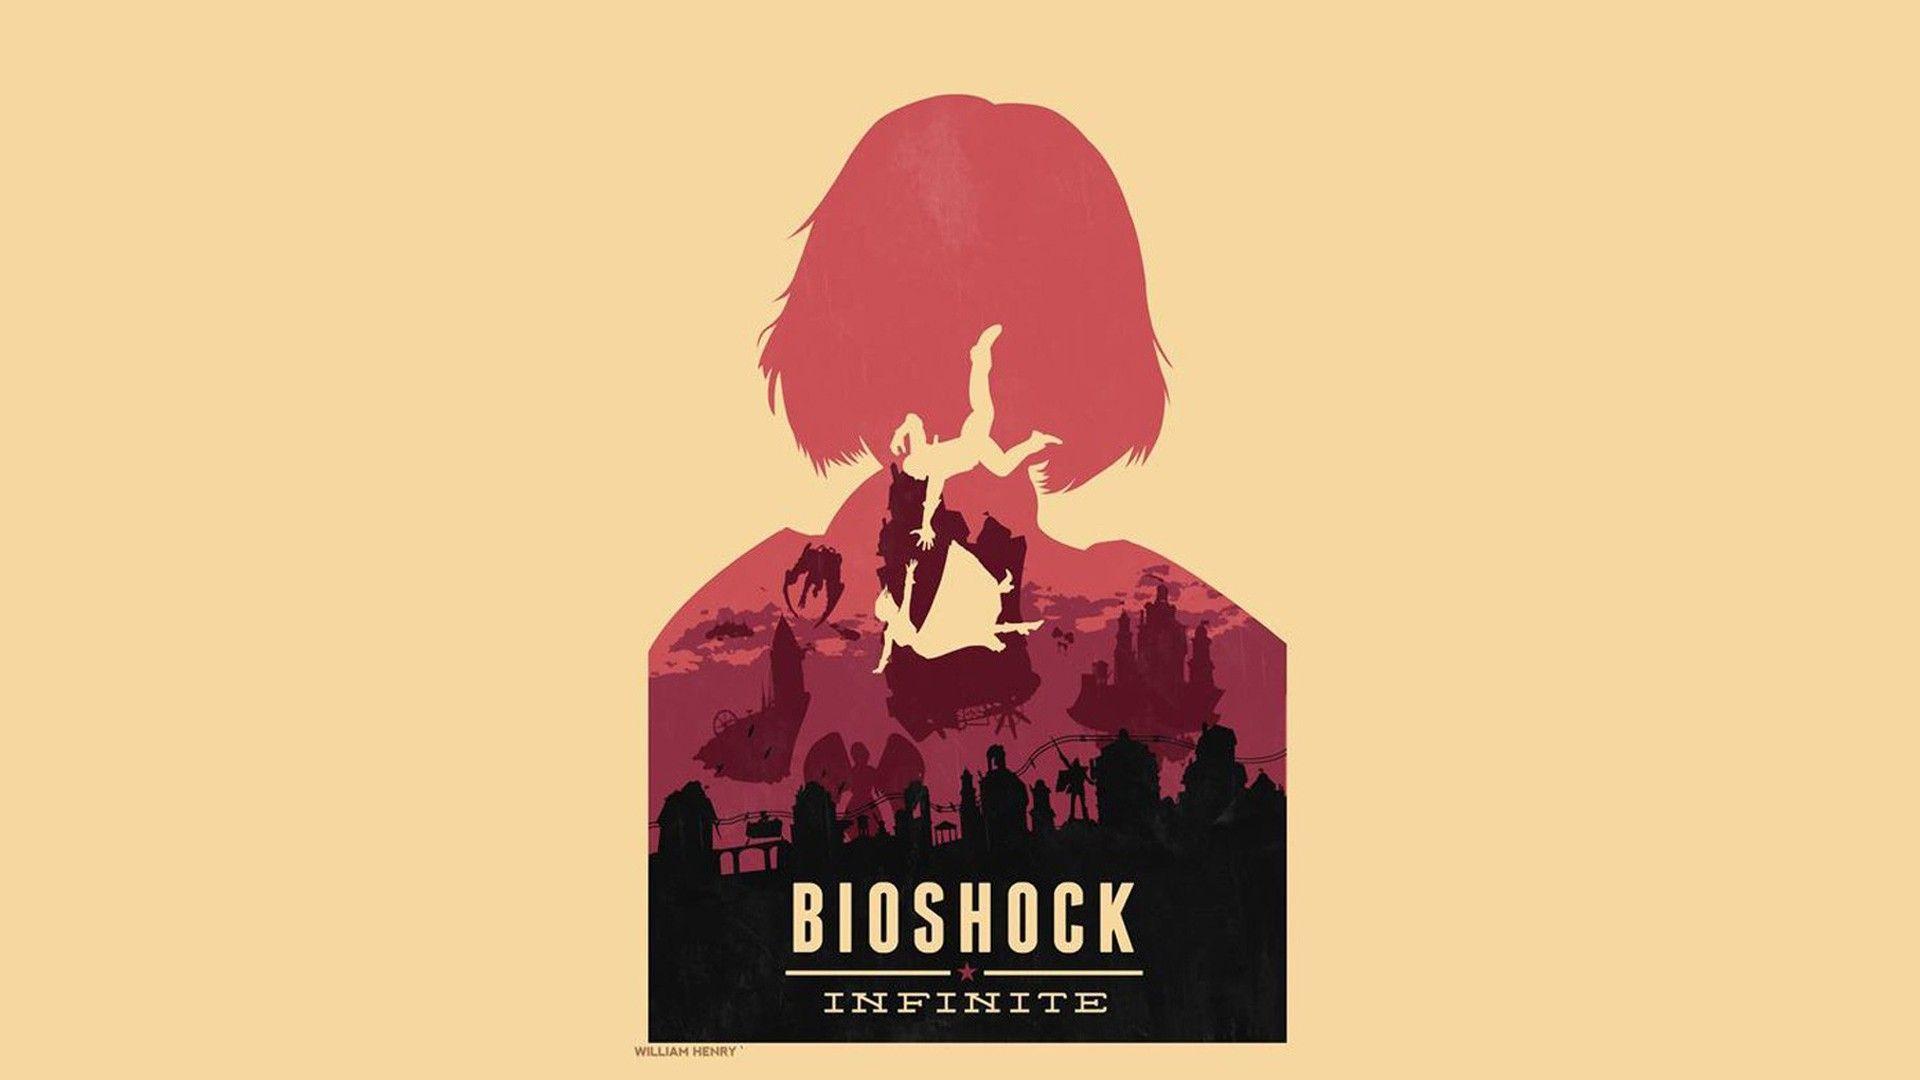 Bioshock Infinite Falling Wallpaper HD 1920x1080PX Bioshock